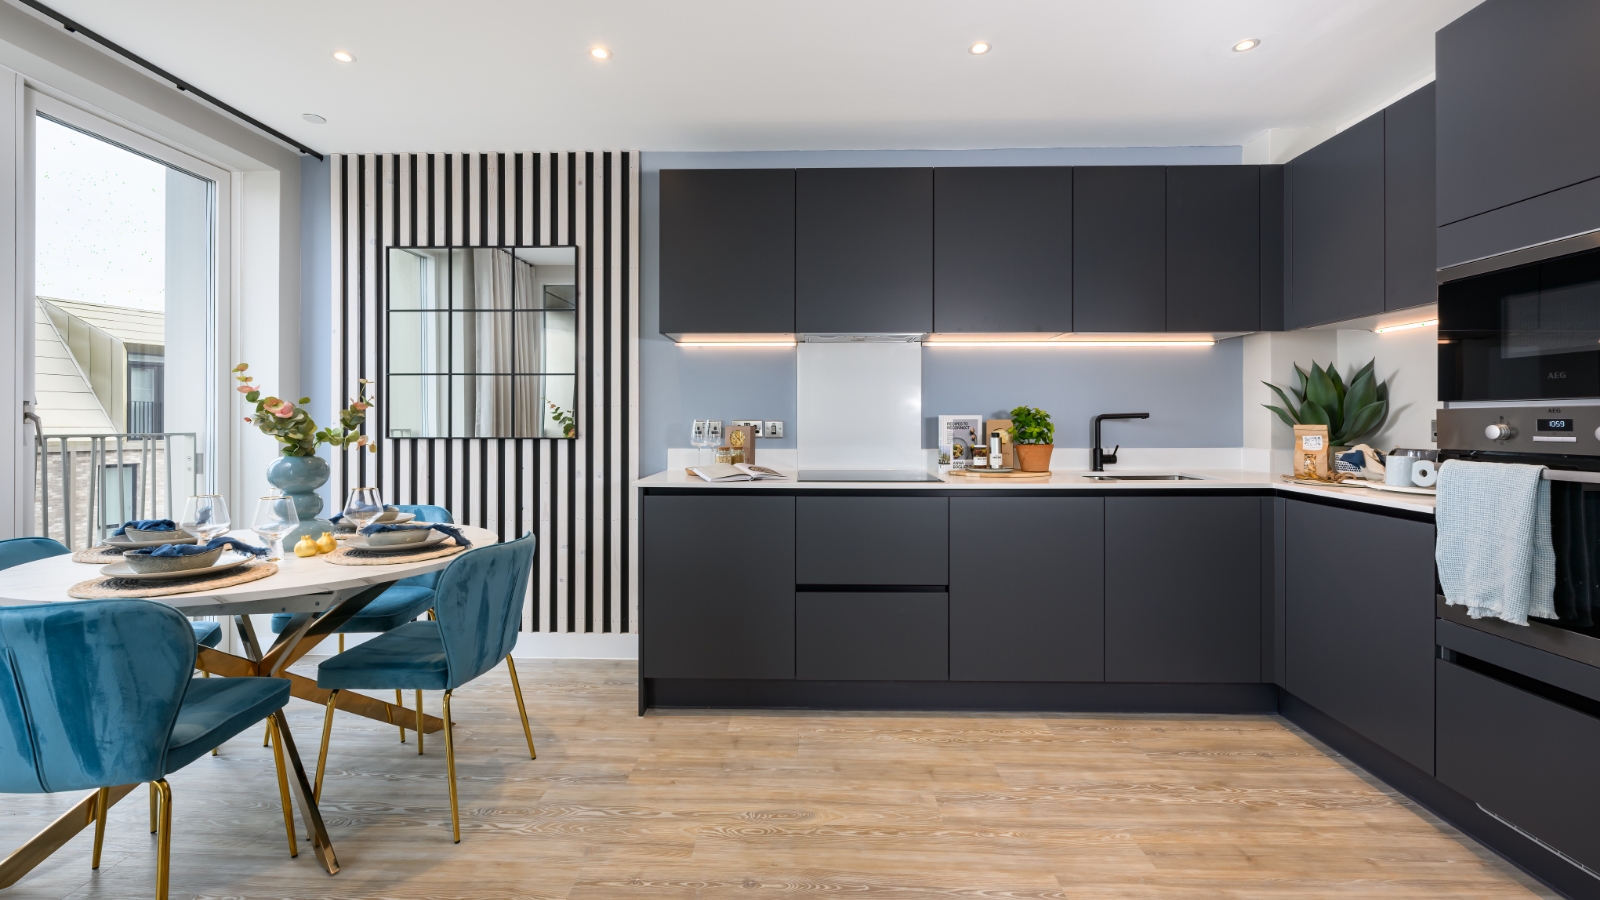 Fusion apartments indicative kitchen